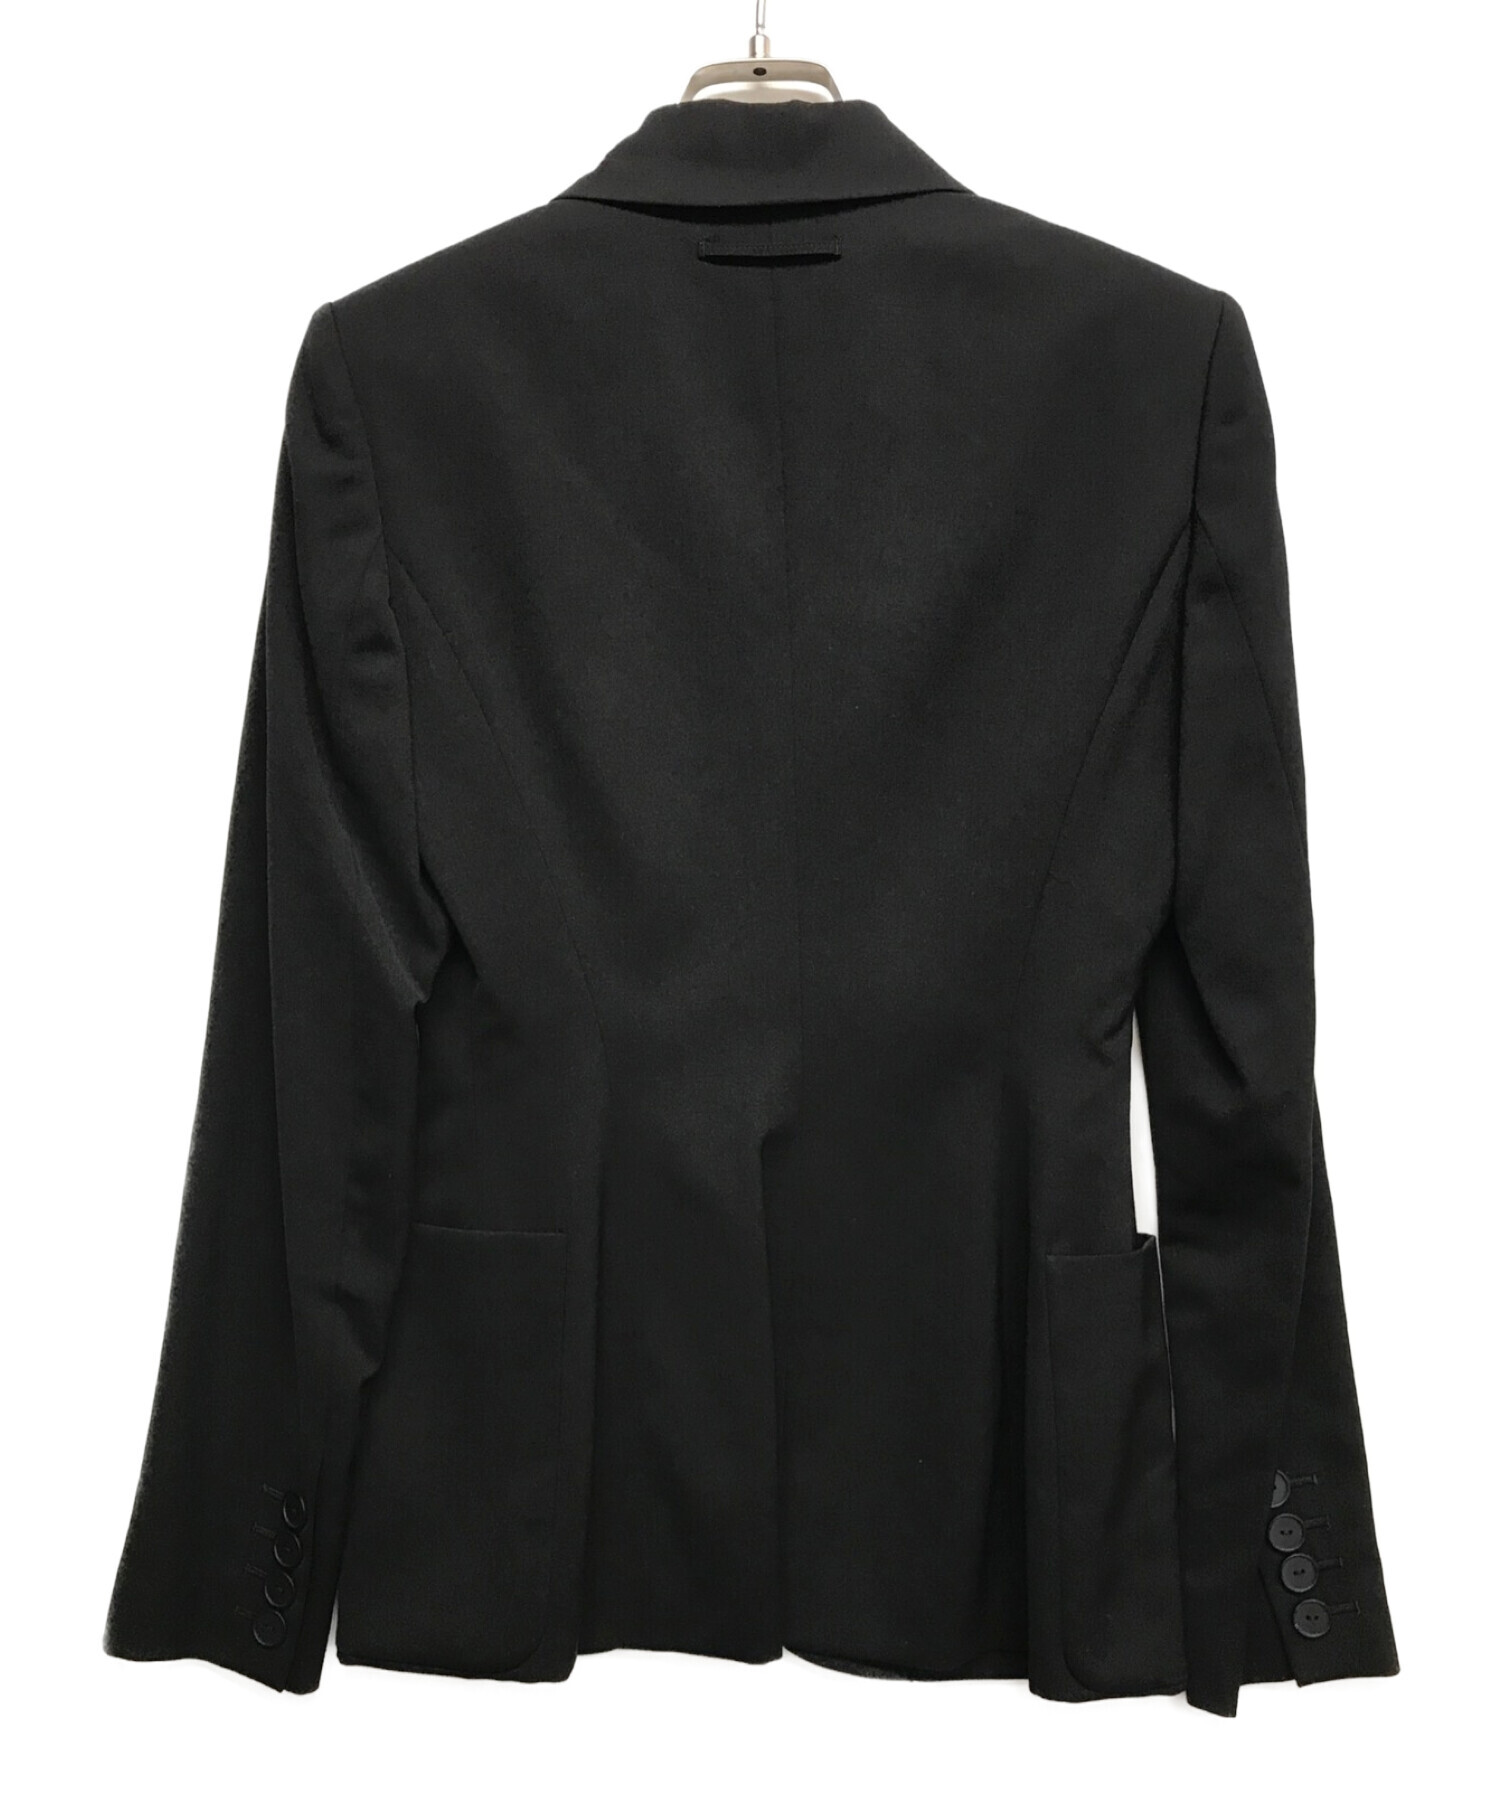 Jean Paul Gaultier FEMME (ジャンポールゴルチェフェム) セットアップスーツ ブラック サイズ:40